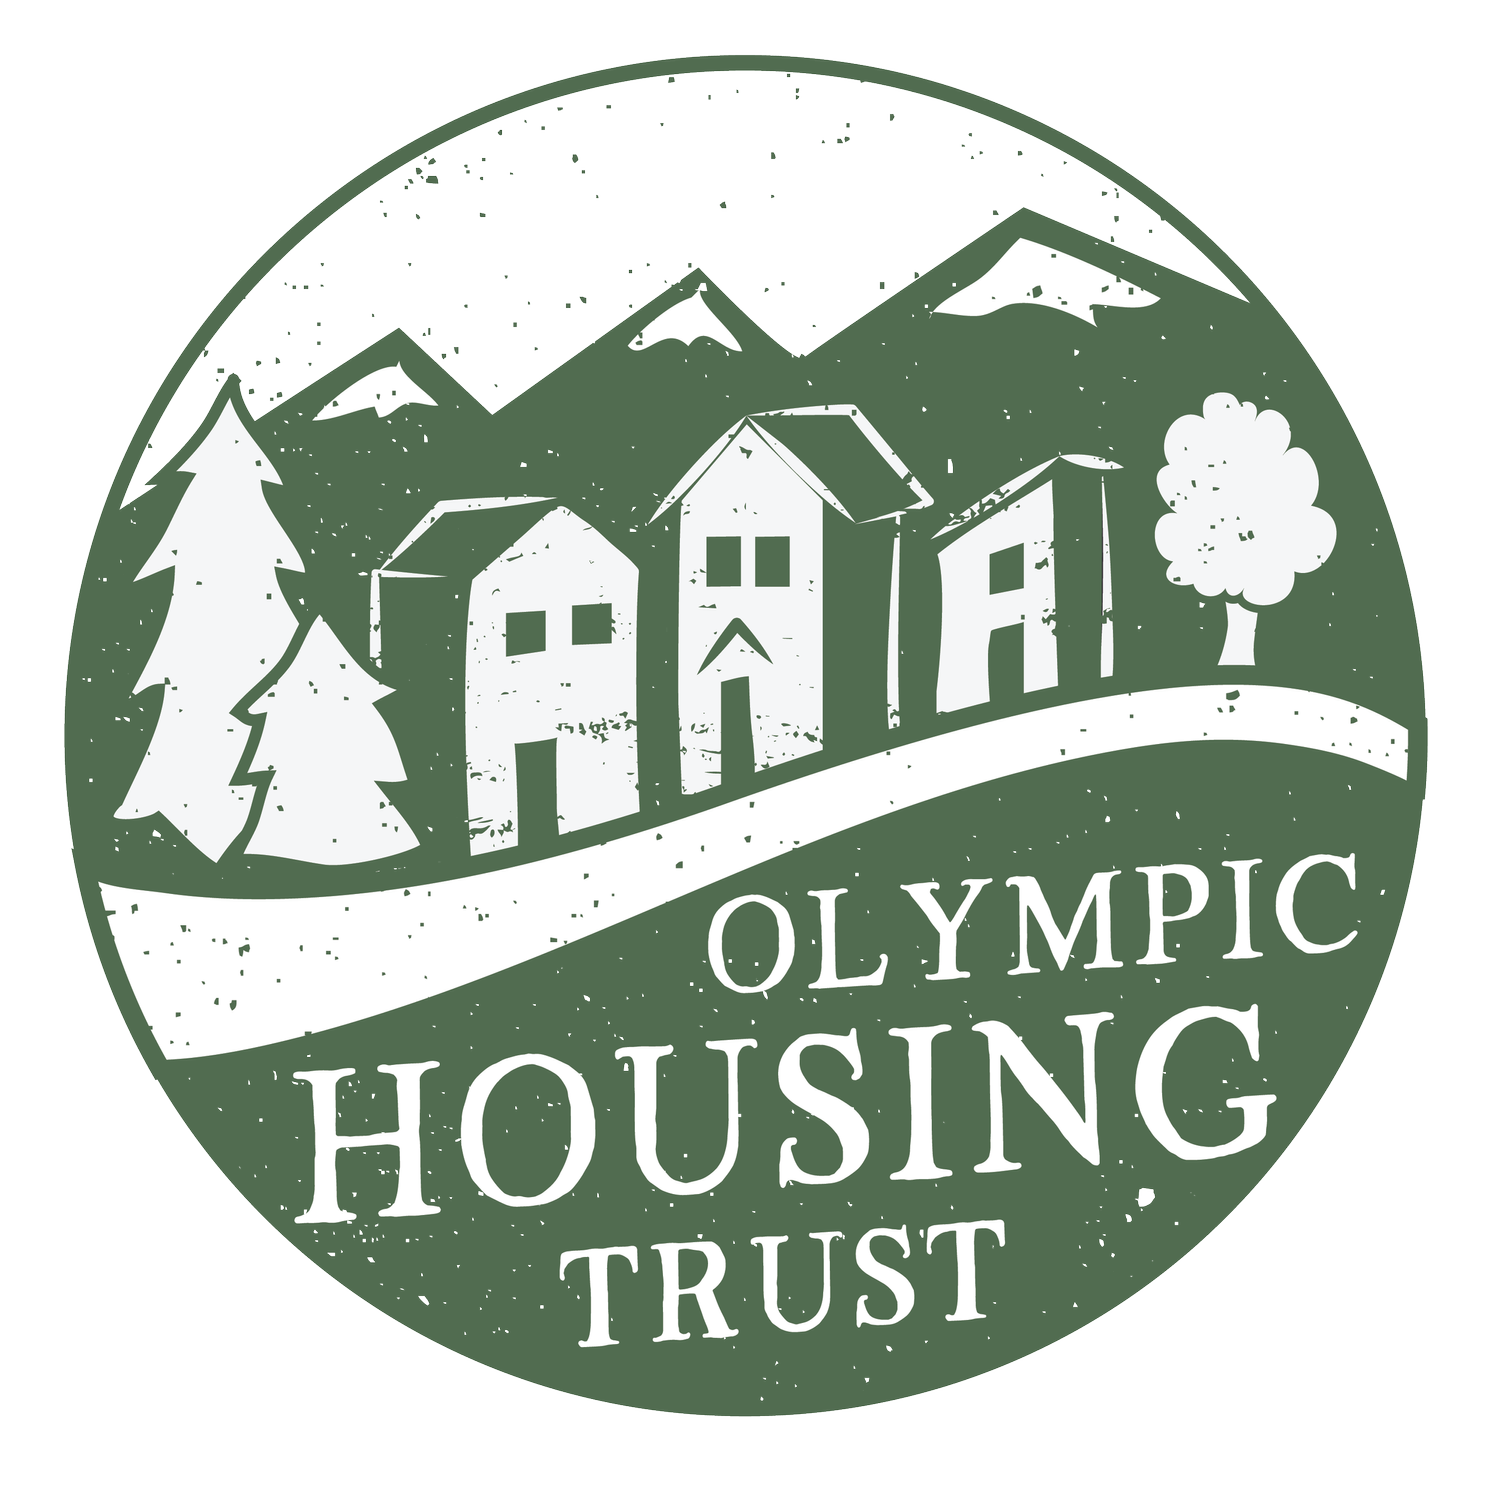 Olympic Housing Trust